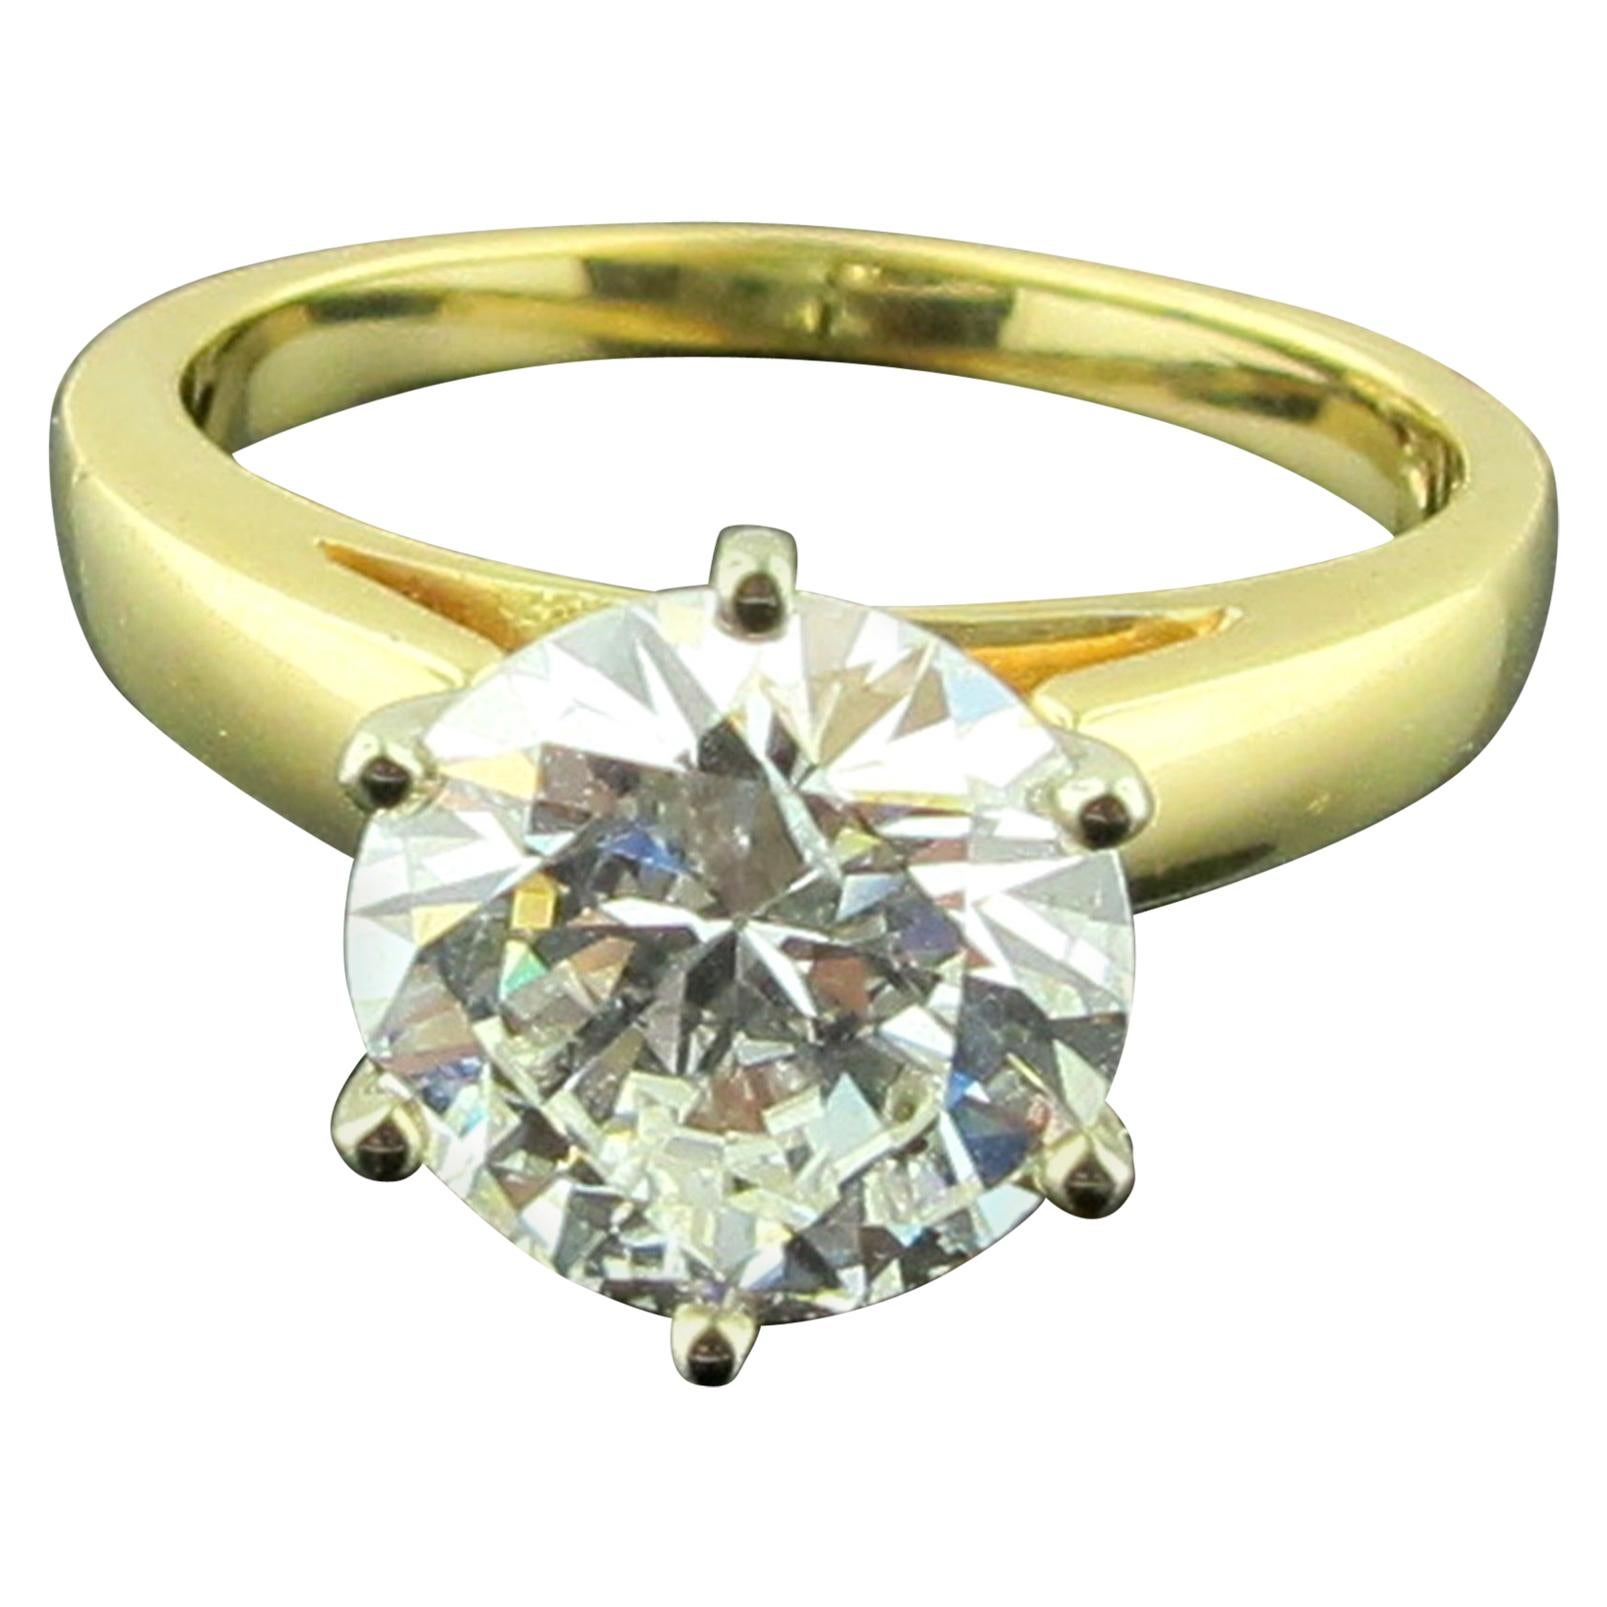 2.53 Carat Round Brilliant Cut Solitaire Diamond Ring in 14 Karat Yellow Gold